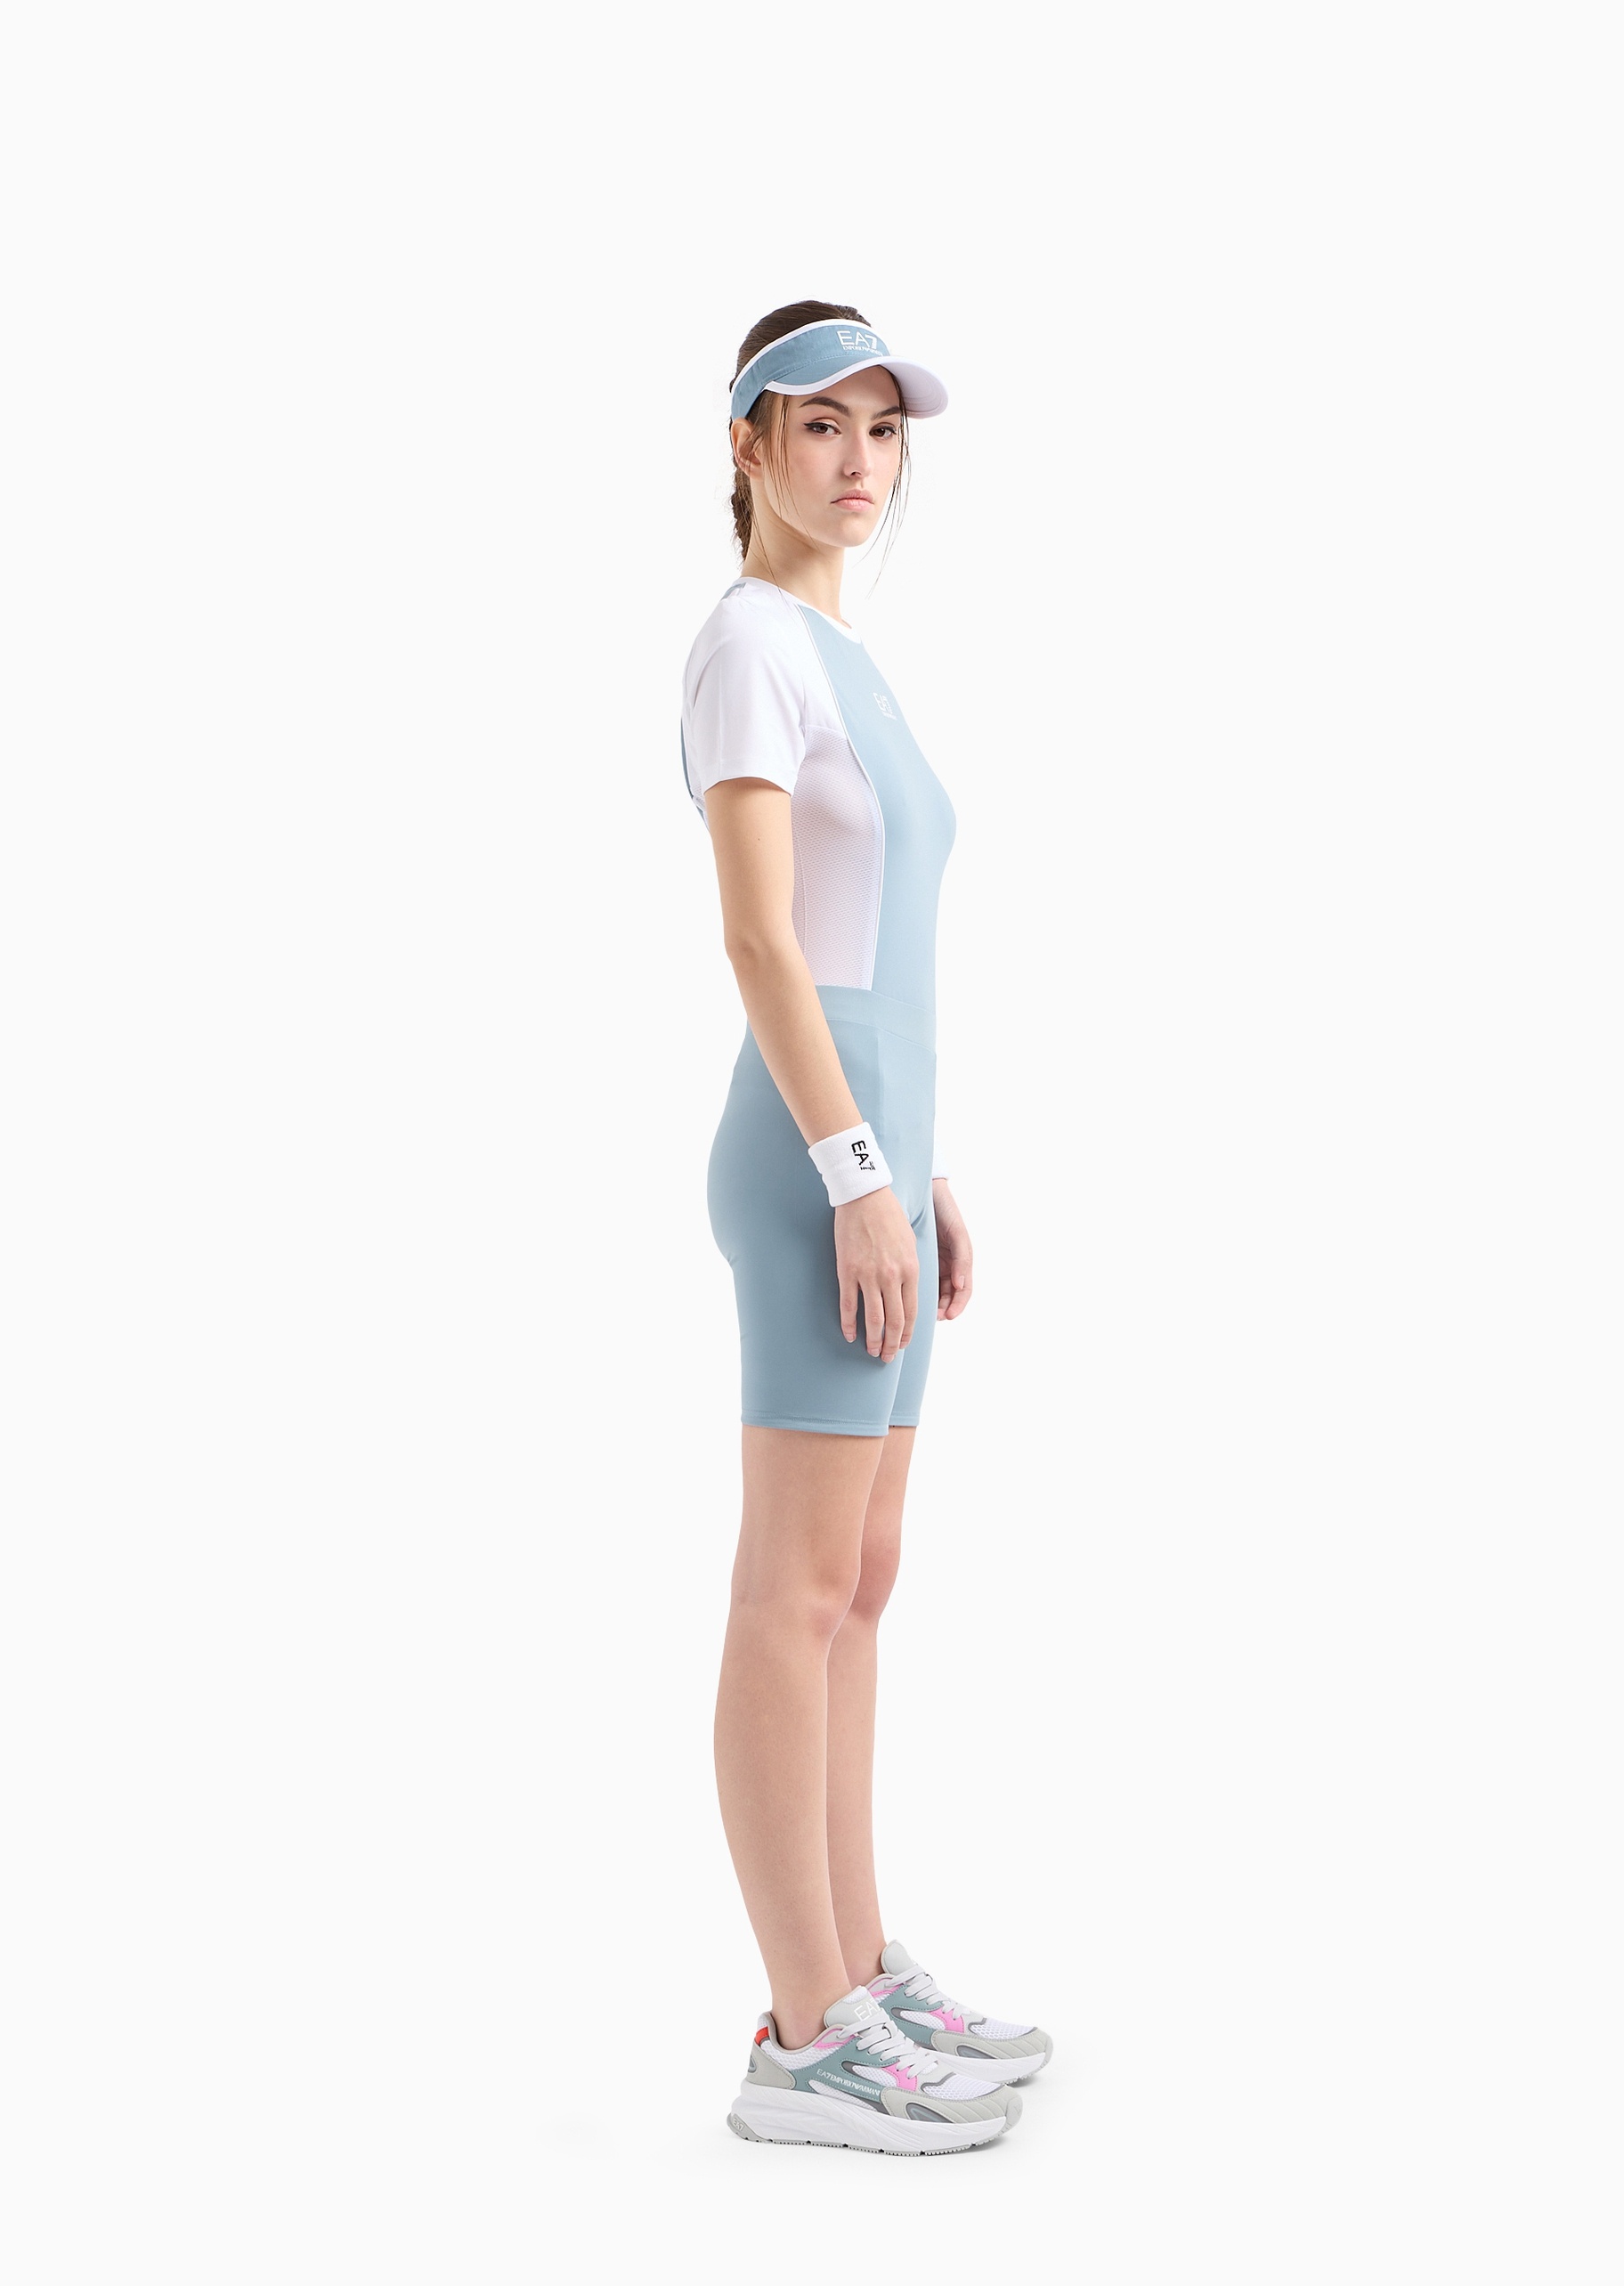 EA7 女士VENTUS 7弹力短袖圆领网球T恤